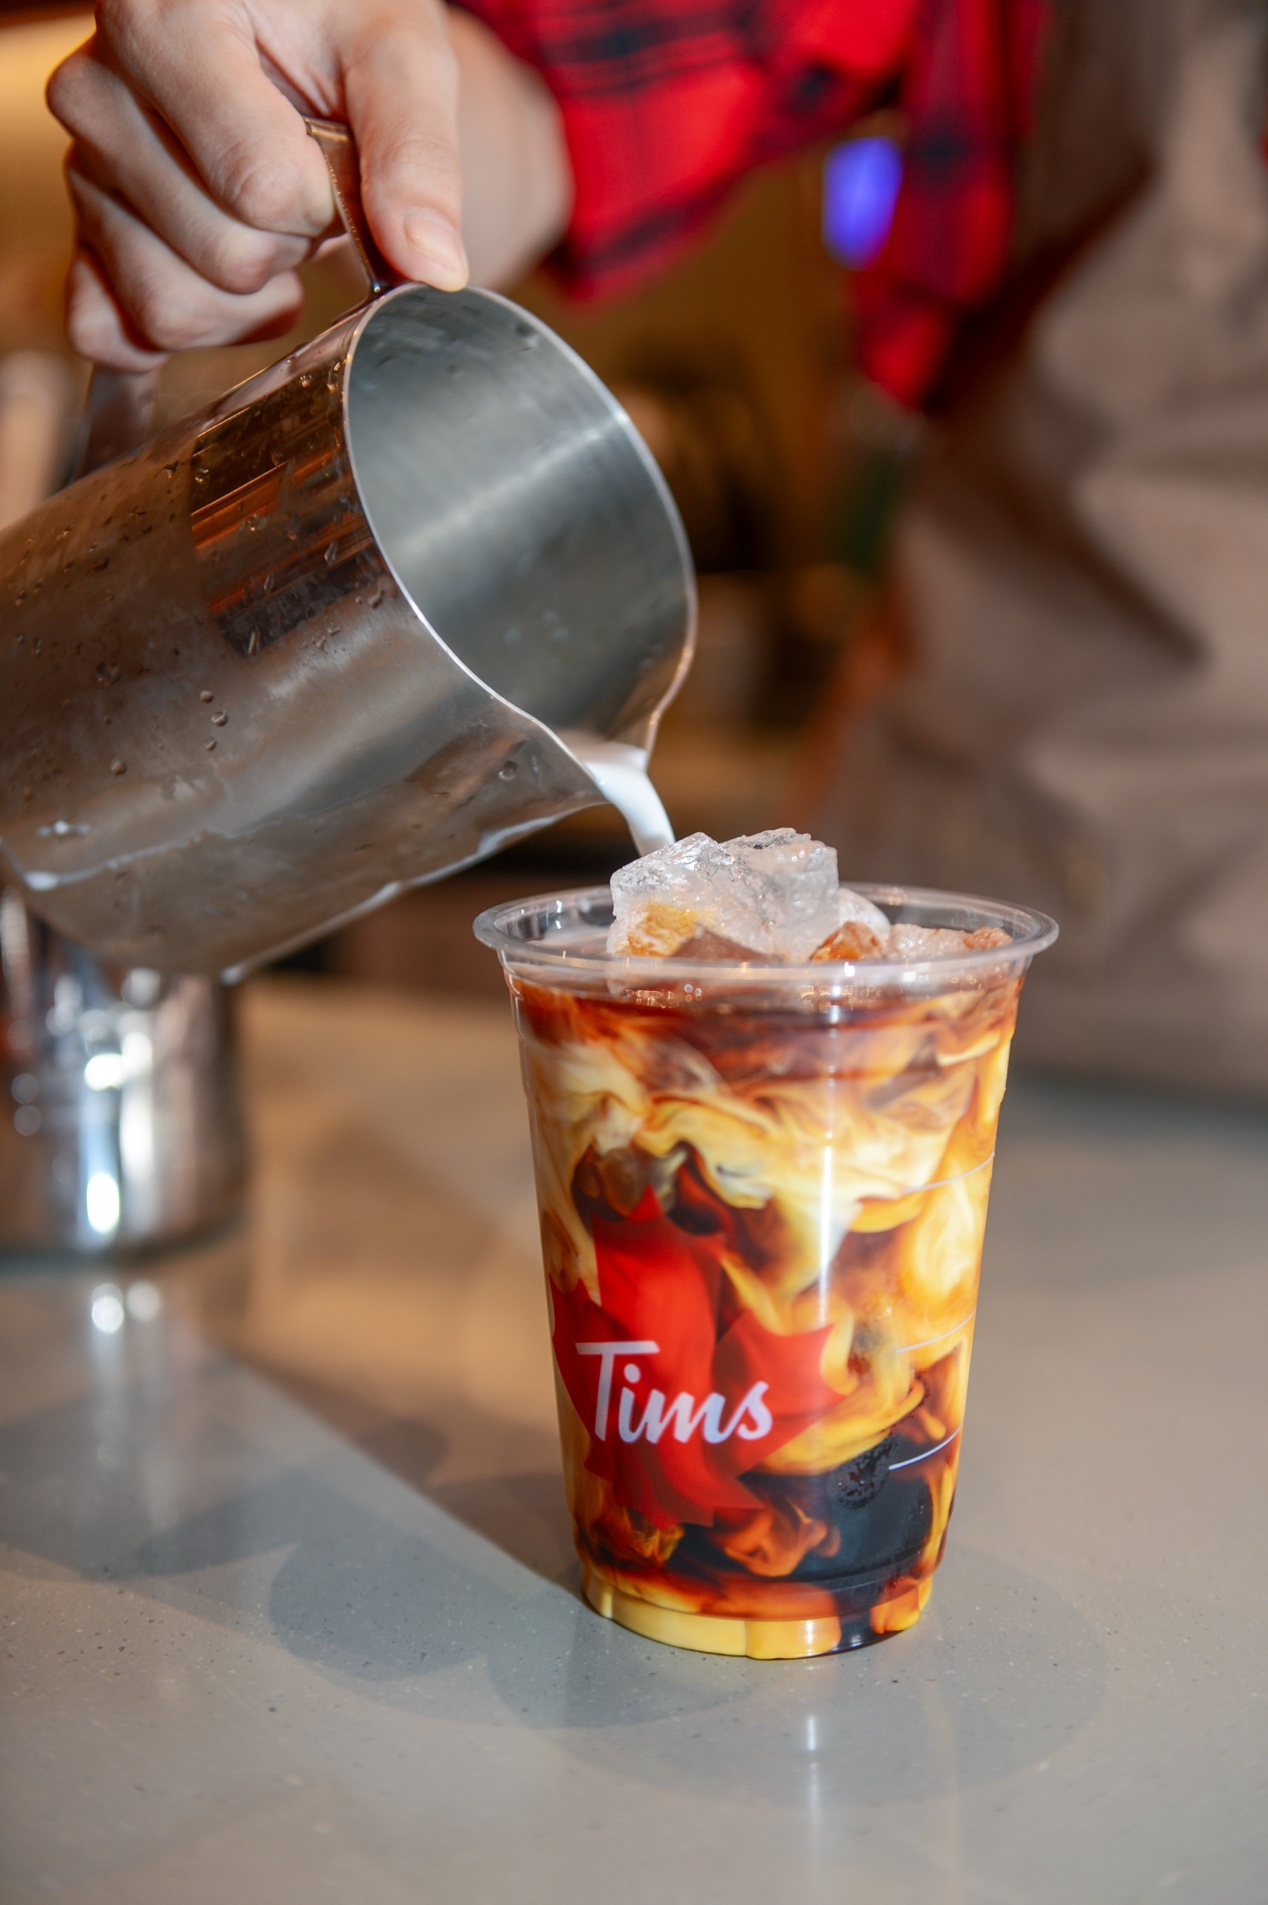 Tims咖啡济南首店正式开业，红动泉城